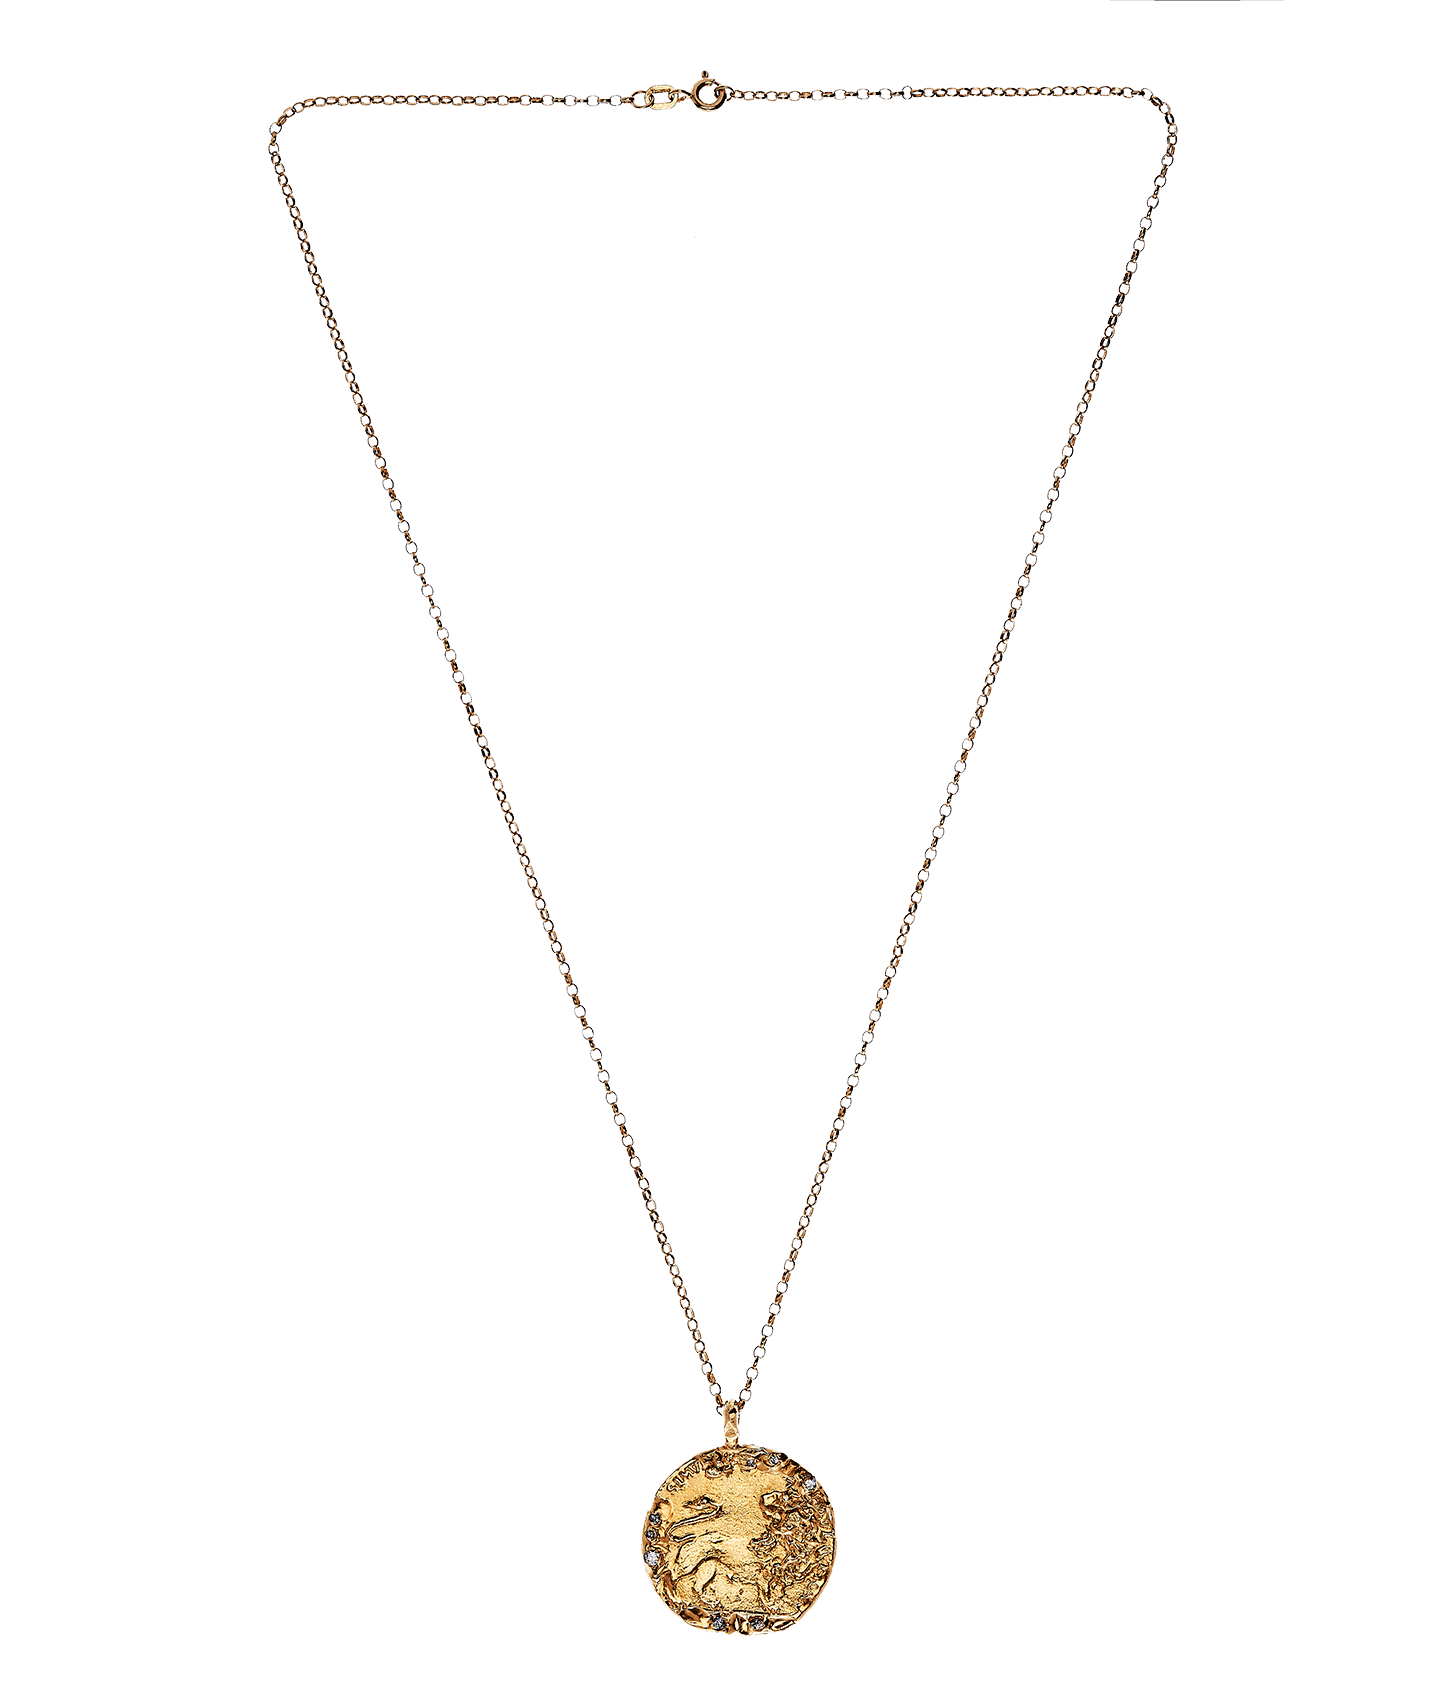 The Diamond Leone Medallion